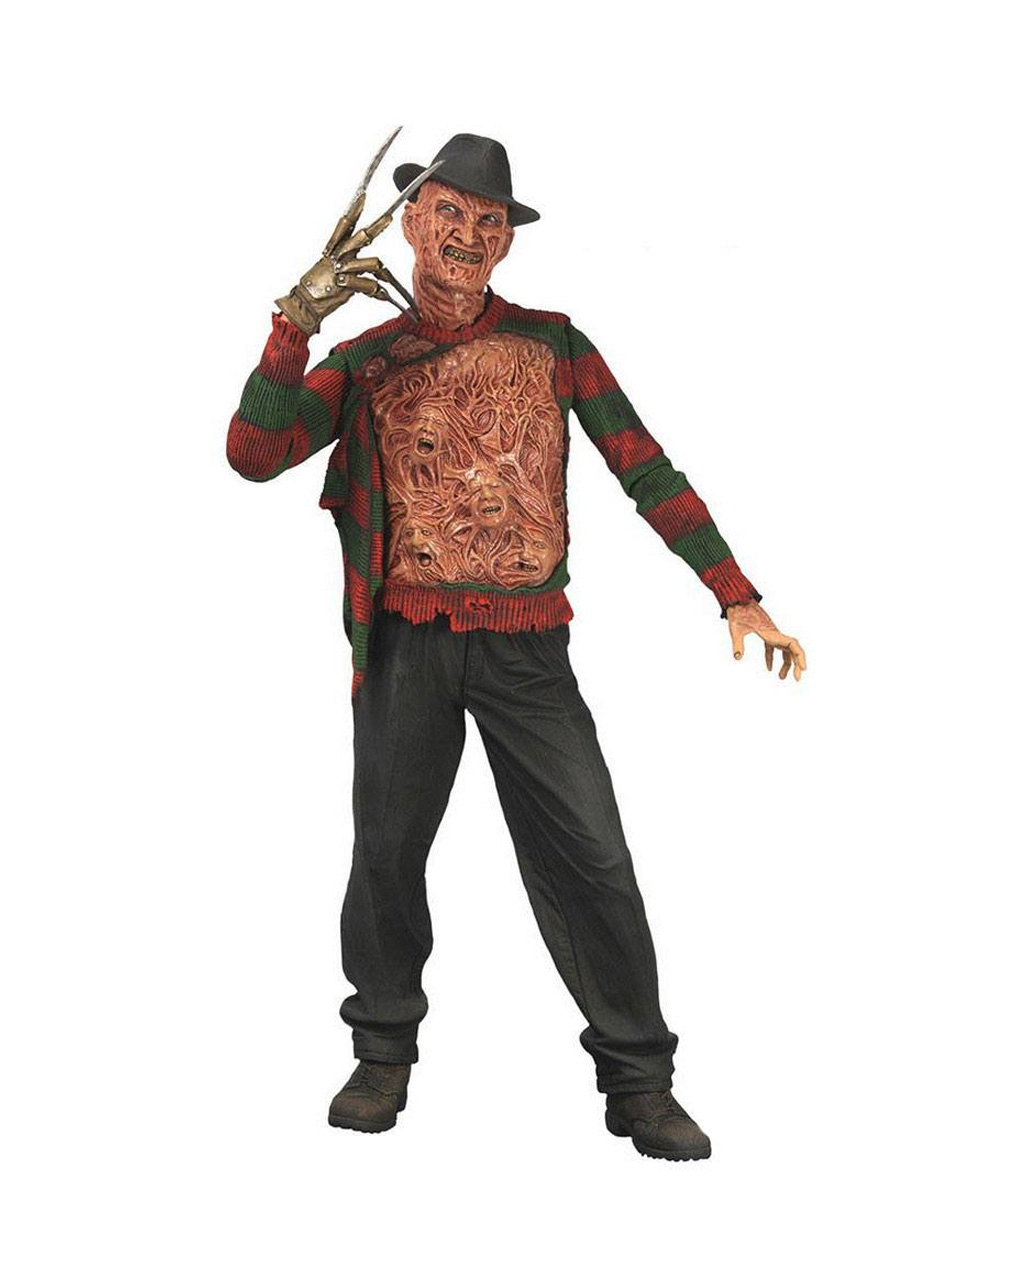 Nightmare on Elm Street Freddy Krueger Actionfigur ➔ von Horror-Shop.com